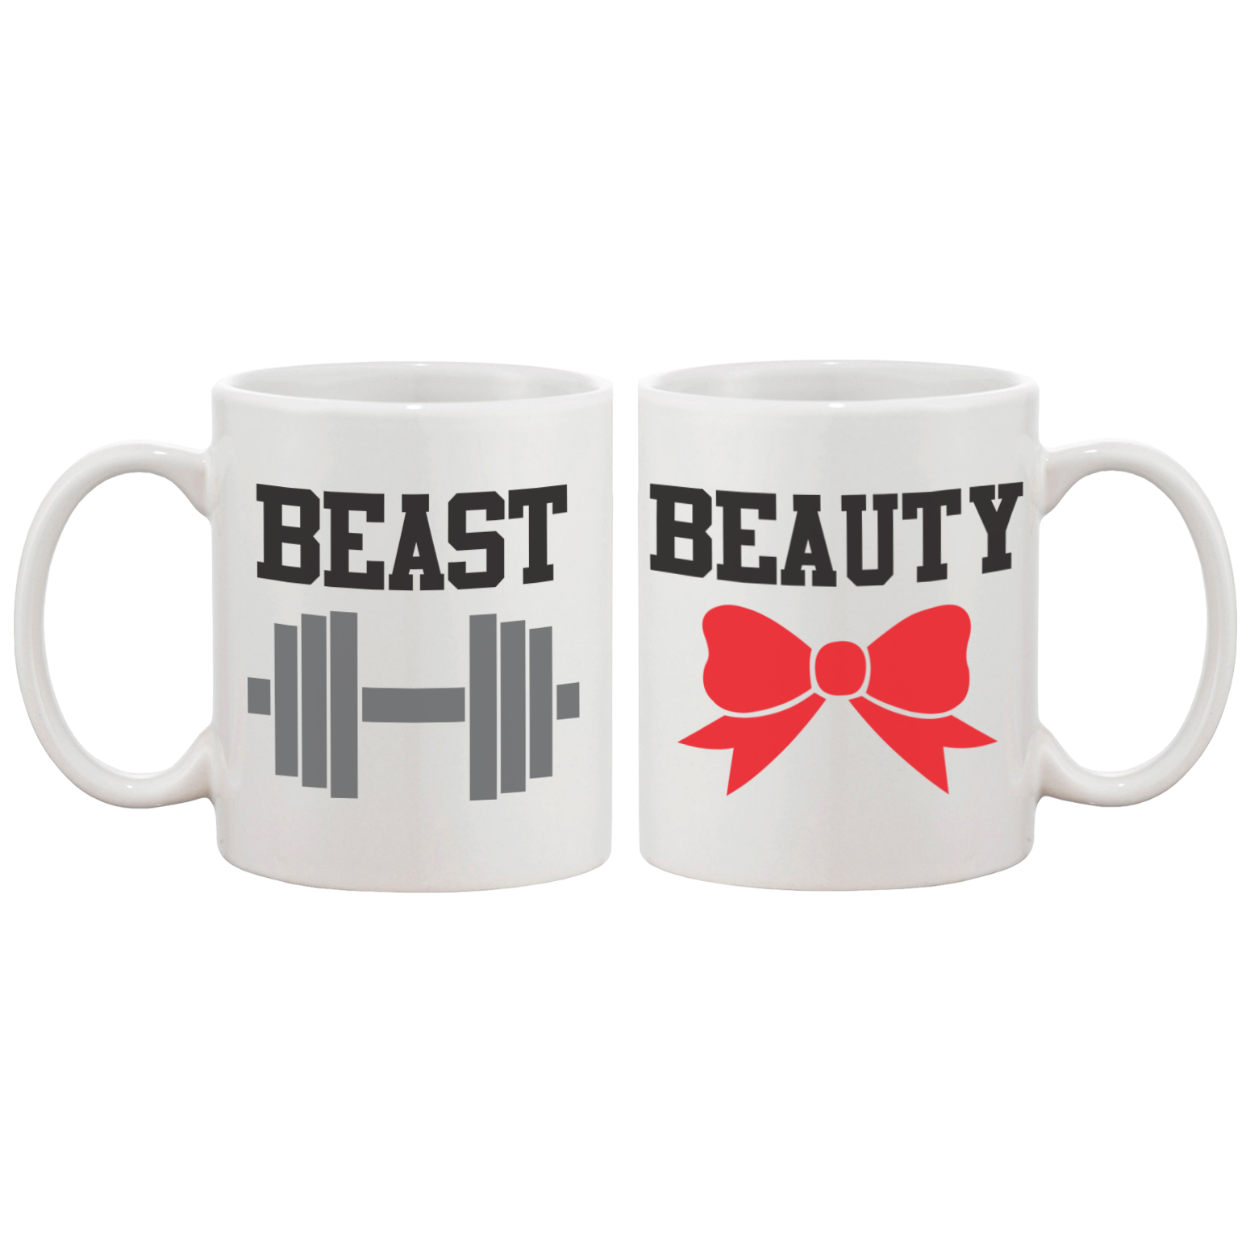 Beauty and Beast Matching Coffee Mugs -His and Hers Couple Coffee Mug Cup White